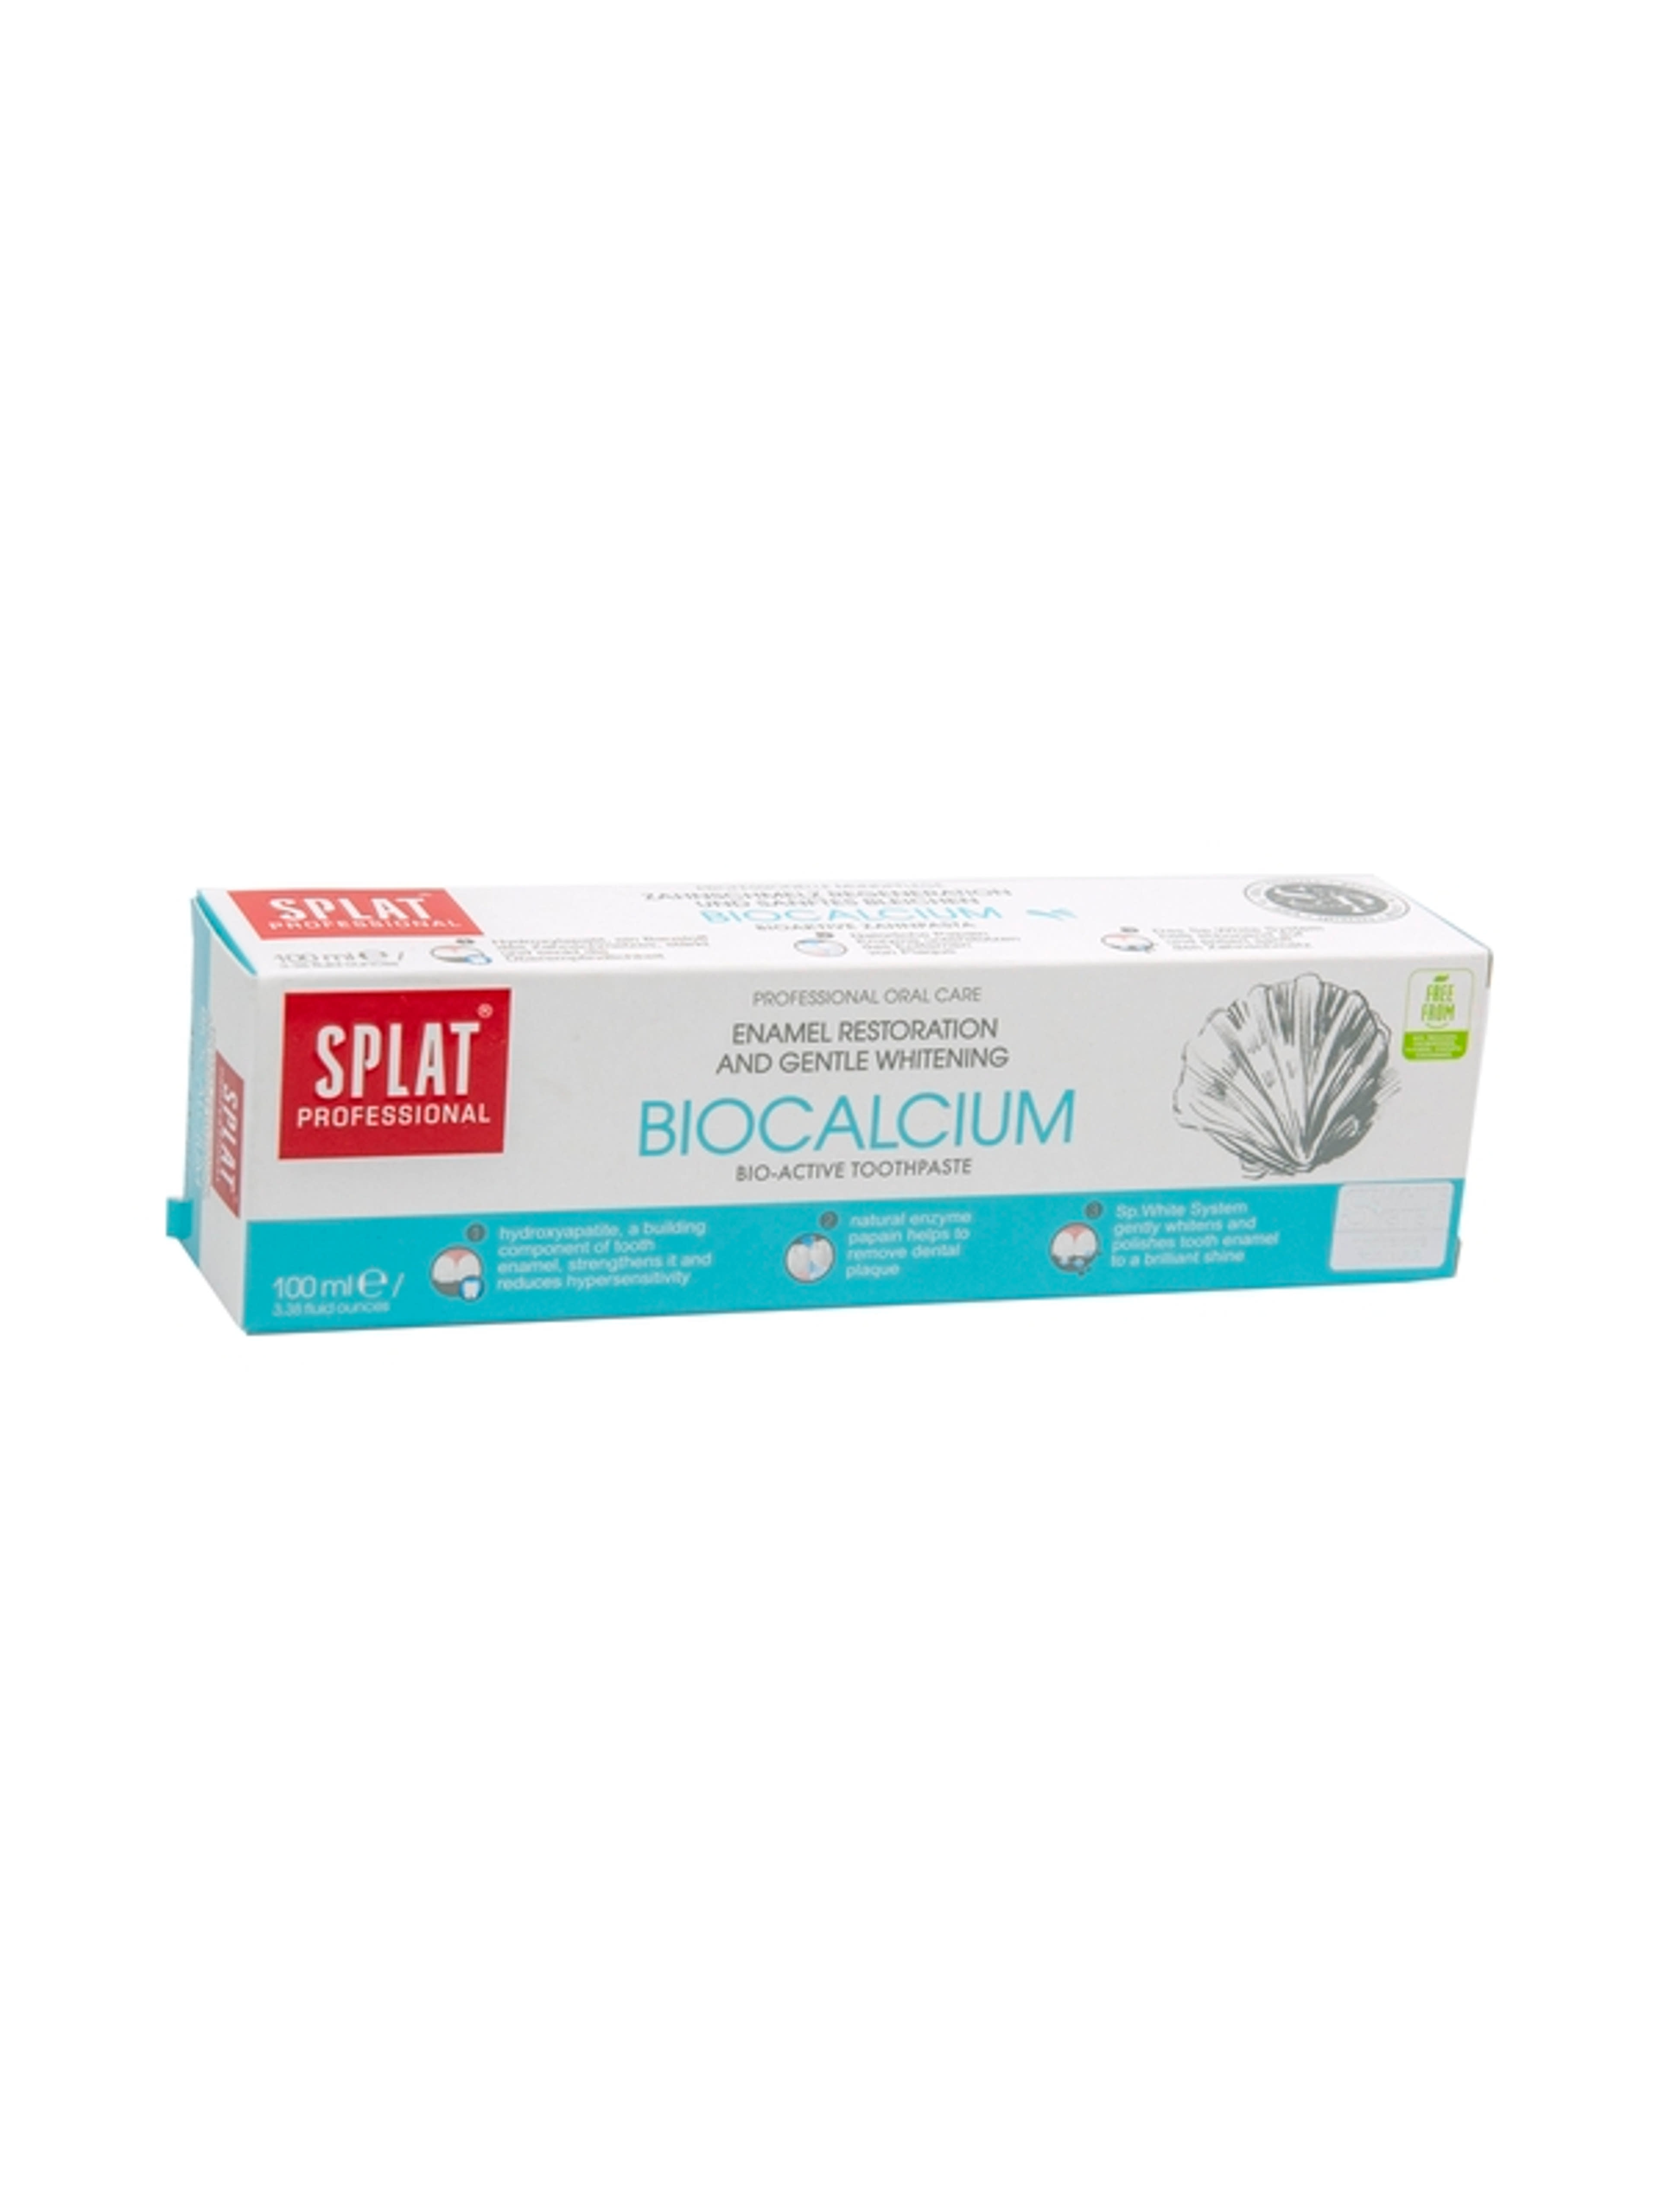 Splat Biocalciom fogkrém - 100 ml